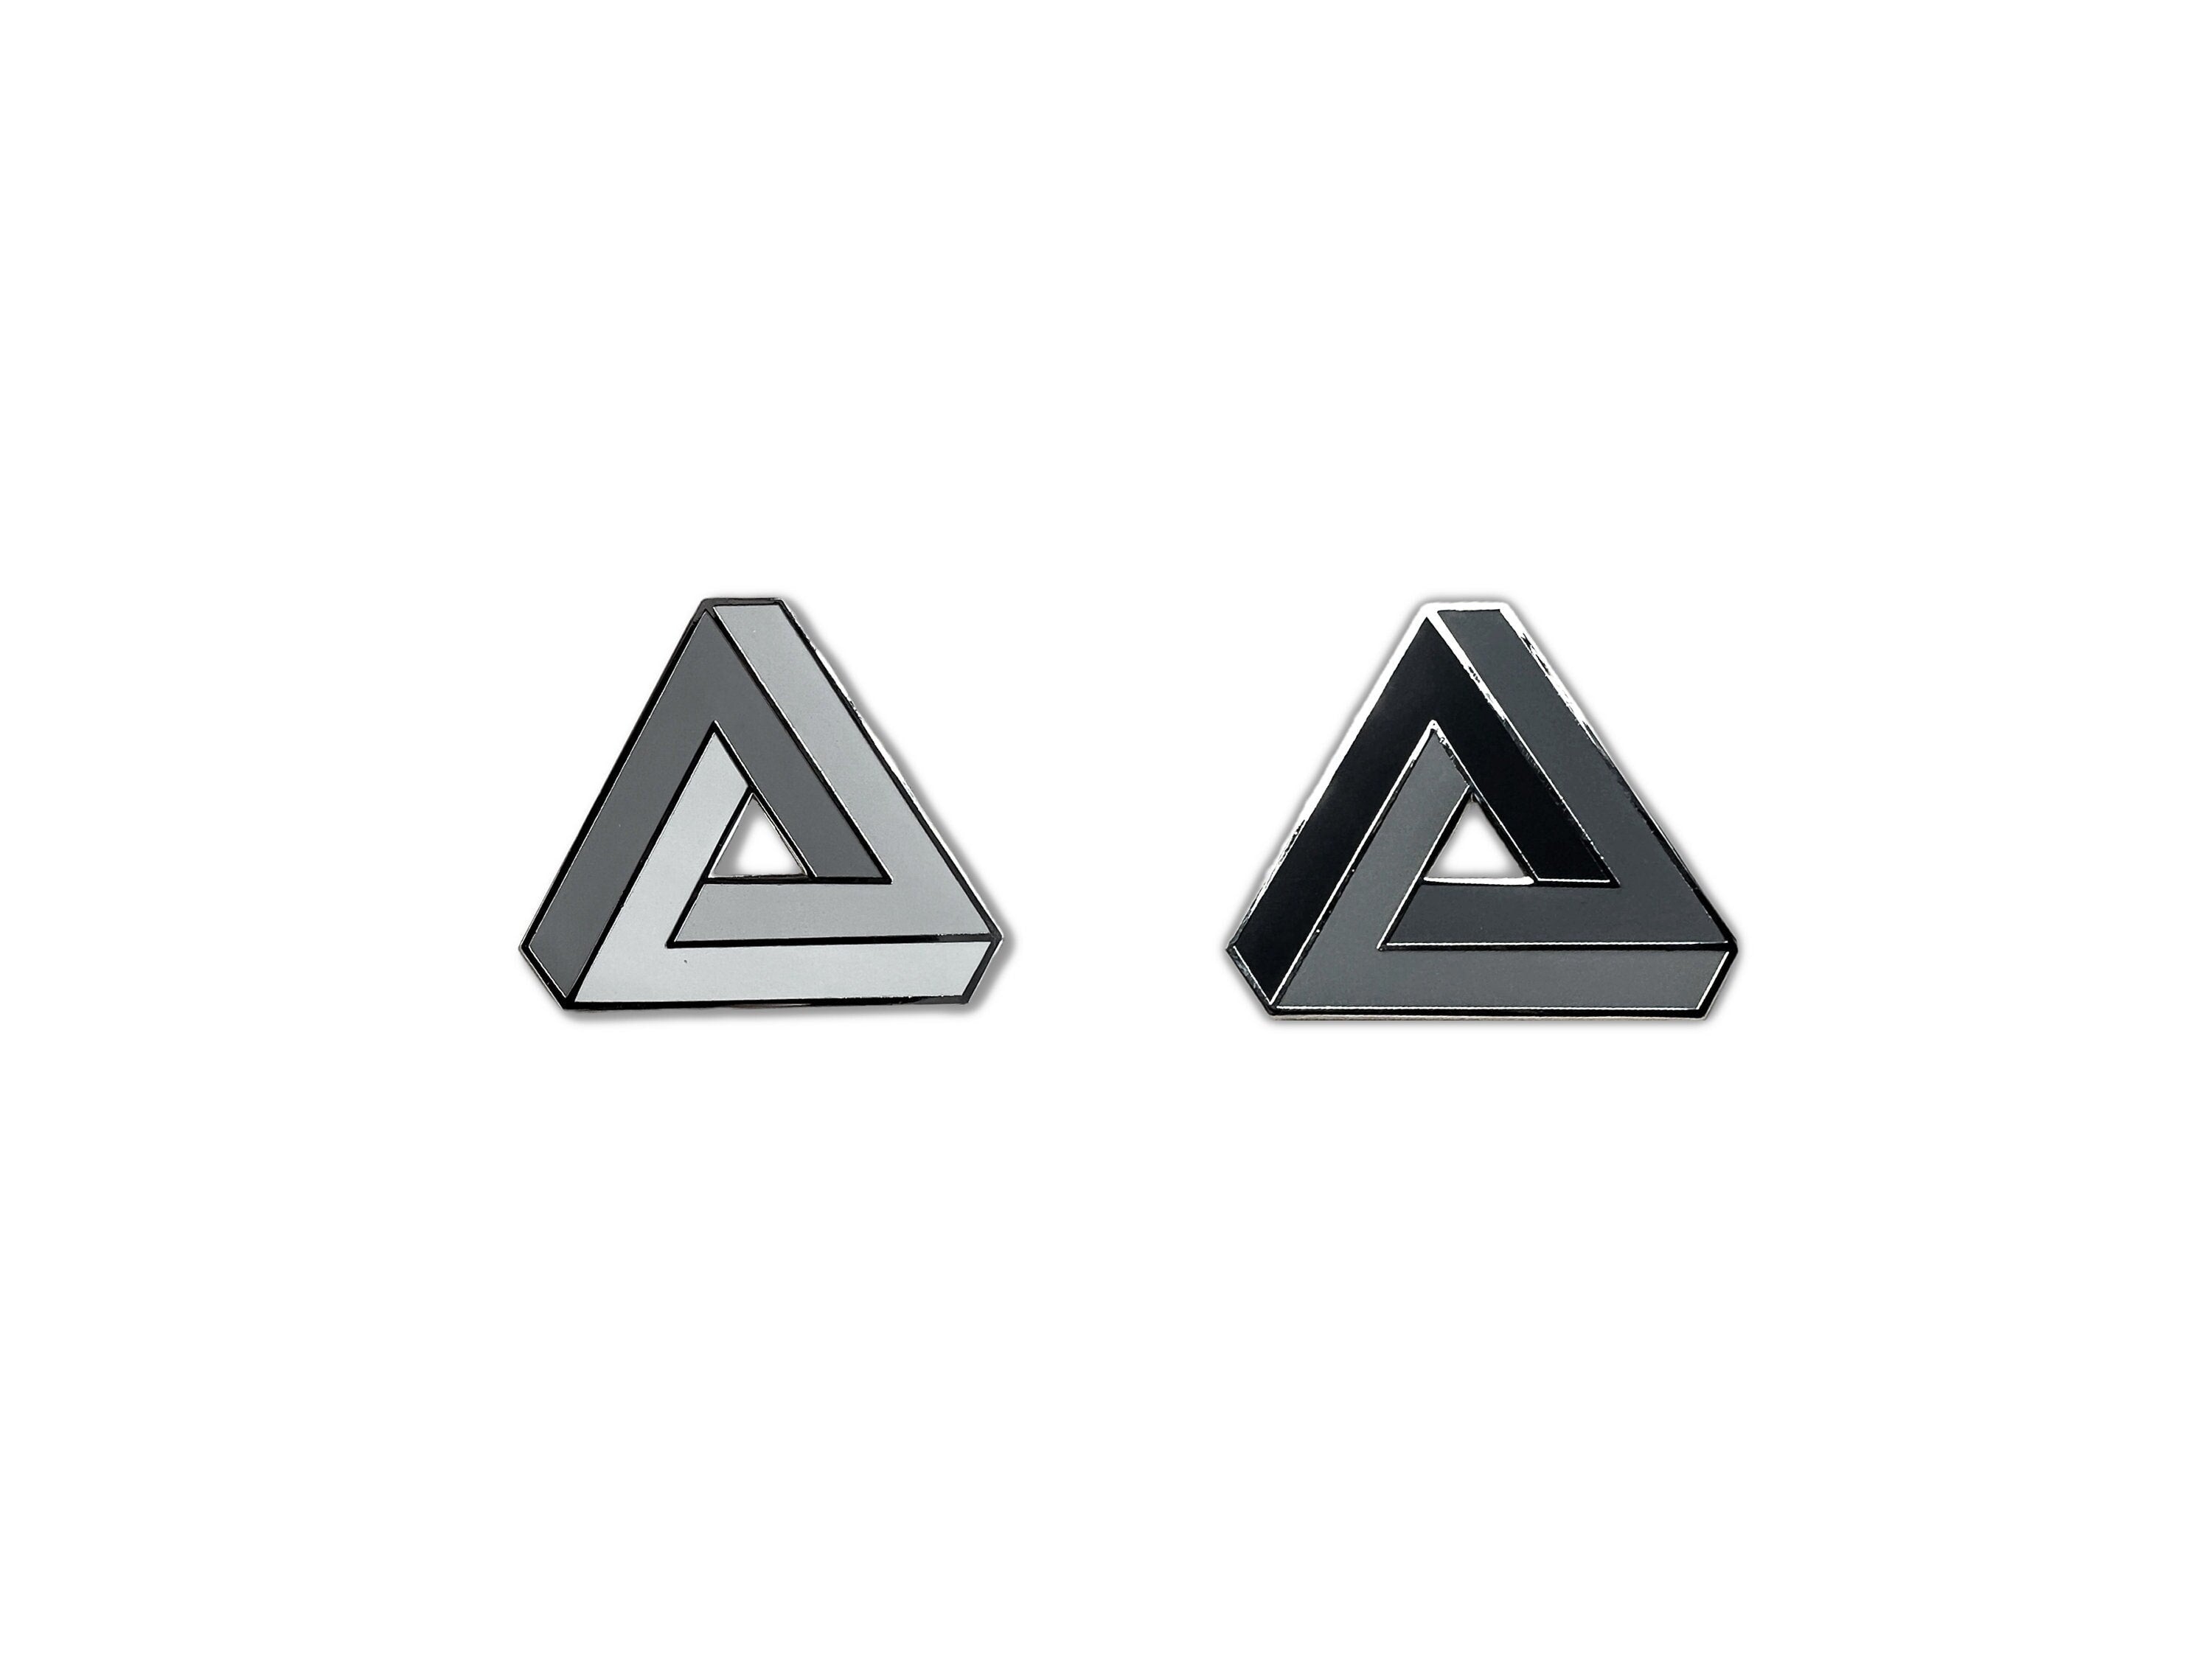 Penrose Triangle Enamel Pin - Futuristic / Minimalist Lapel Pin - Optical Illusion Math & Geometry Brooch